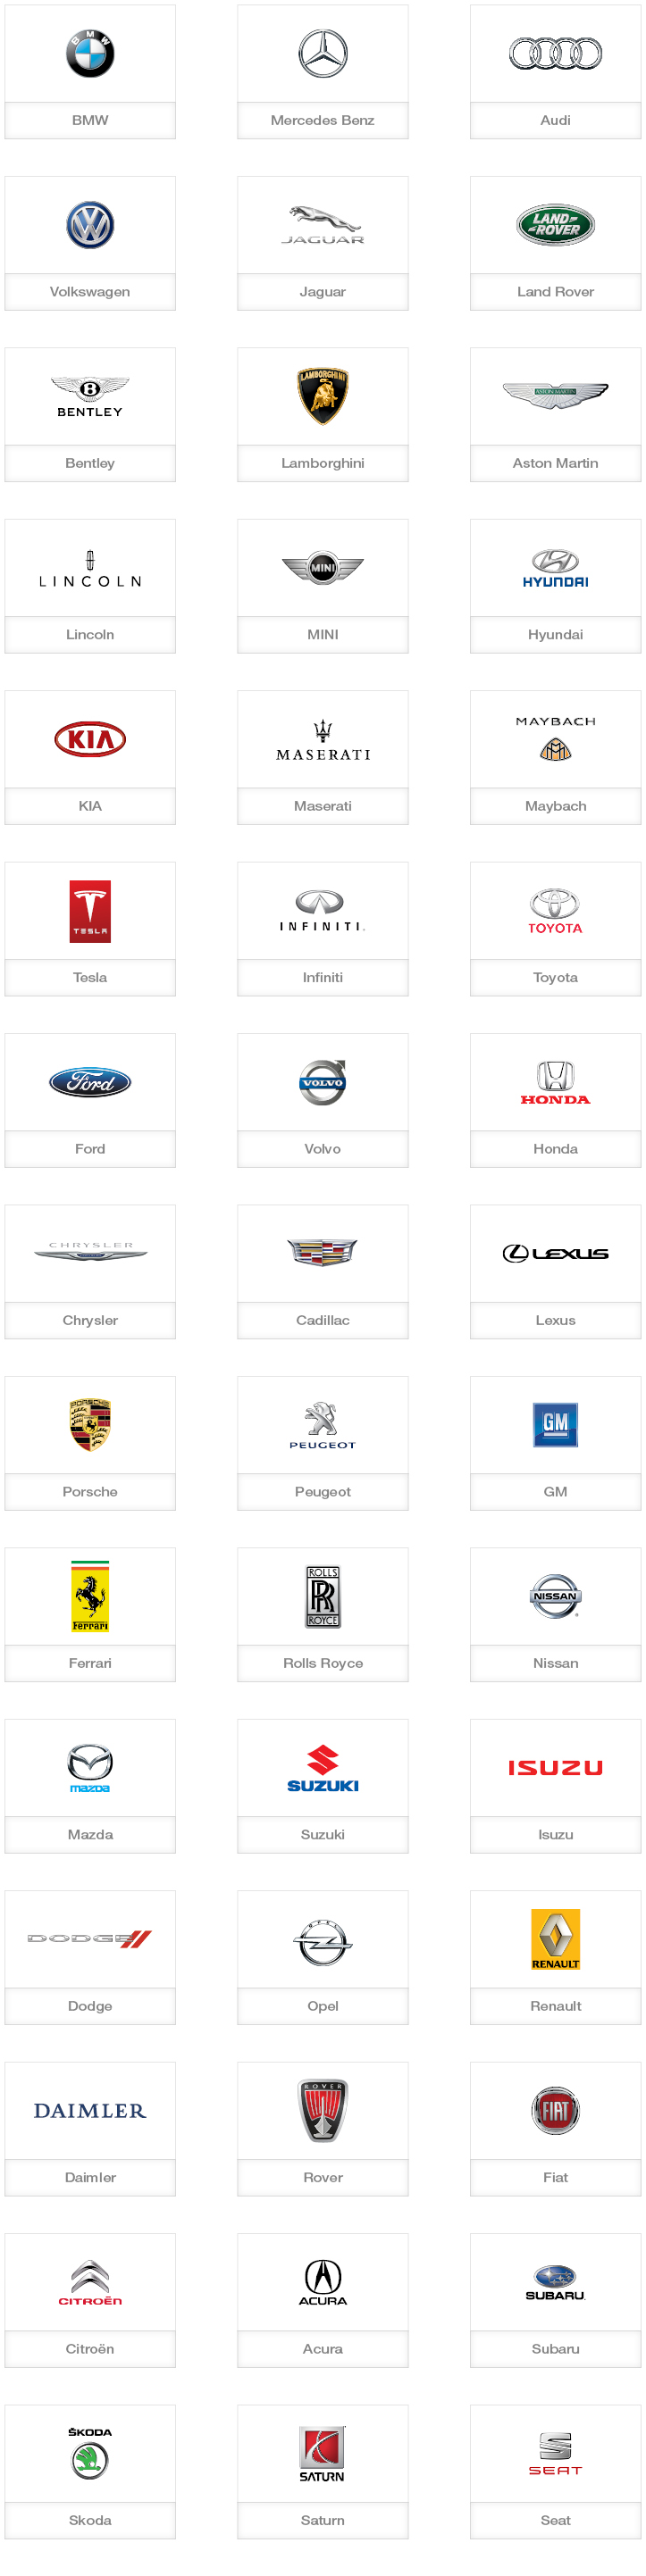 Hunter Partners - Automobile Manufacturers